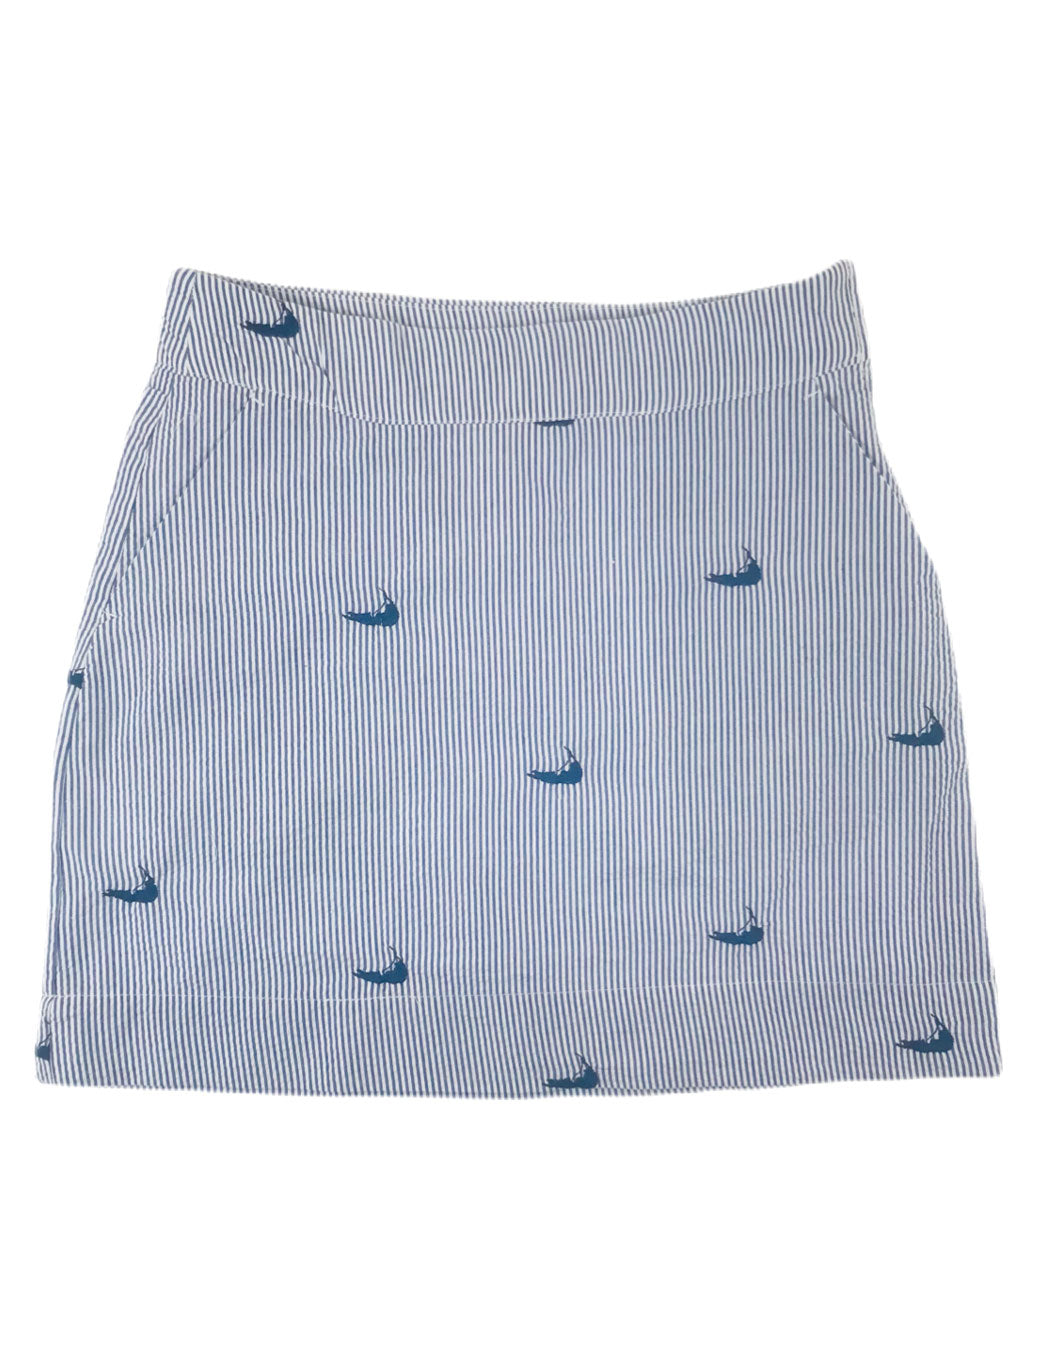 Blue Seersucker Women's Skirt with Navy Embroidered Nantuckets